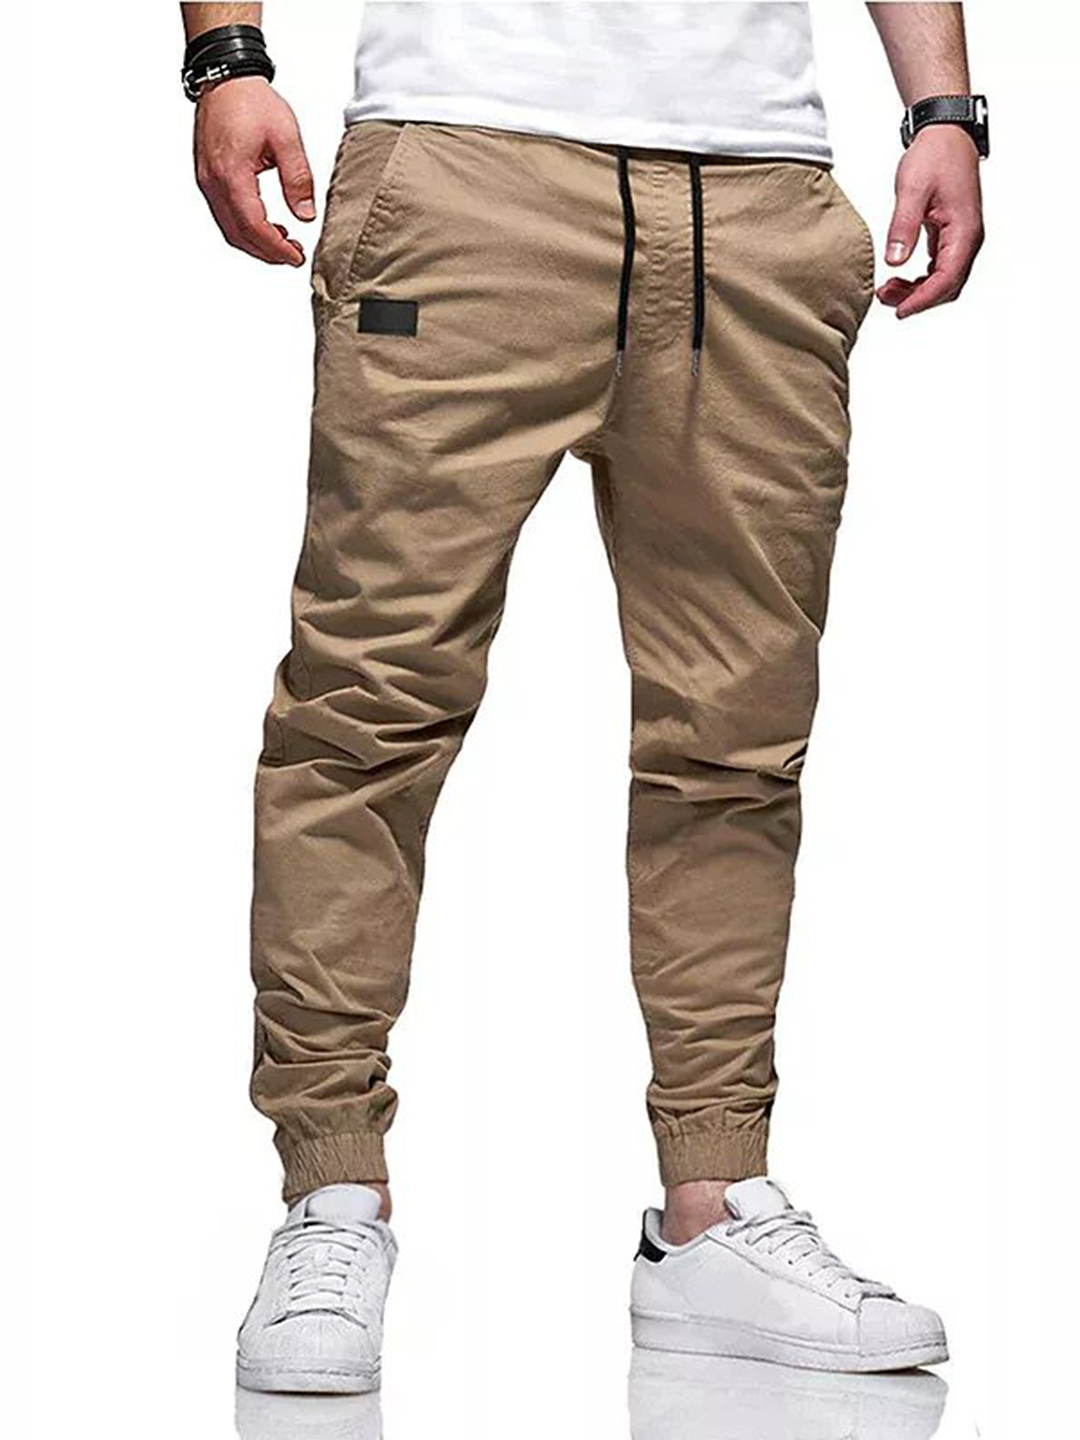 Men's Solid Color Elastic Waistband Drawstring Pants